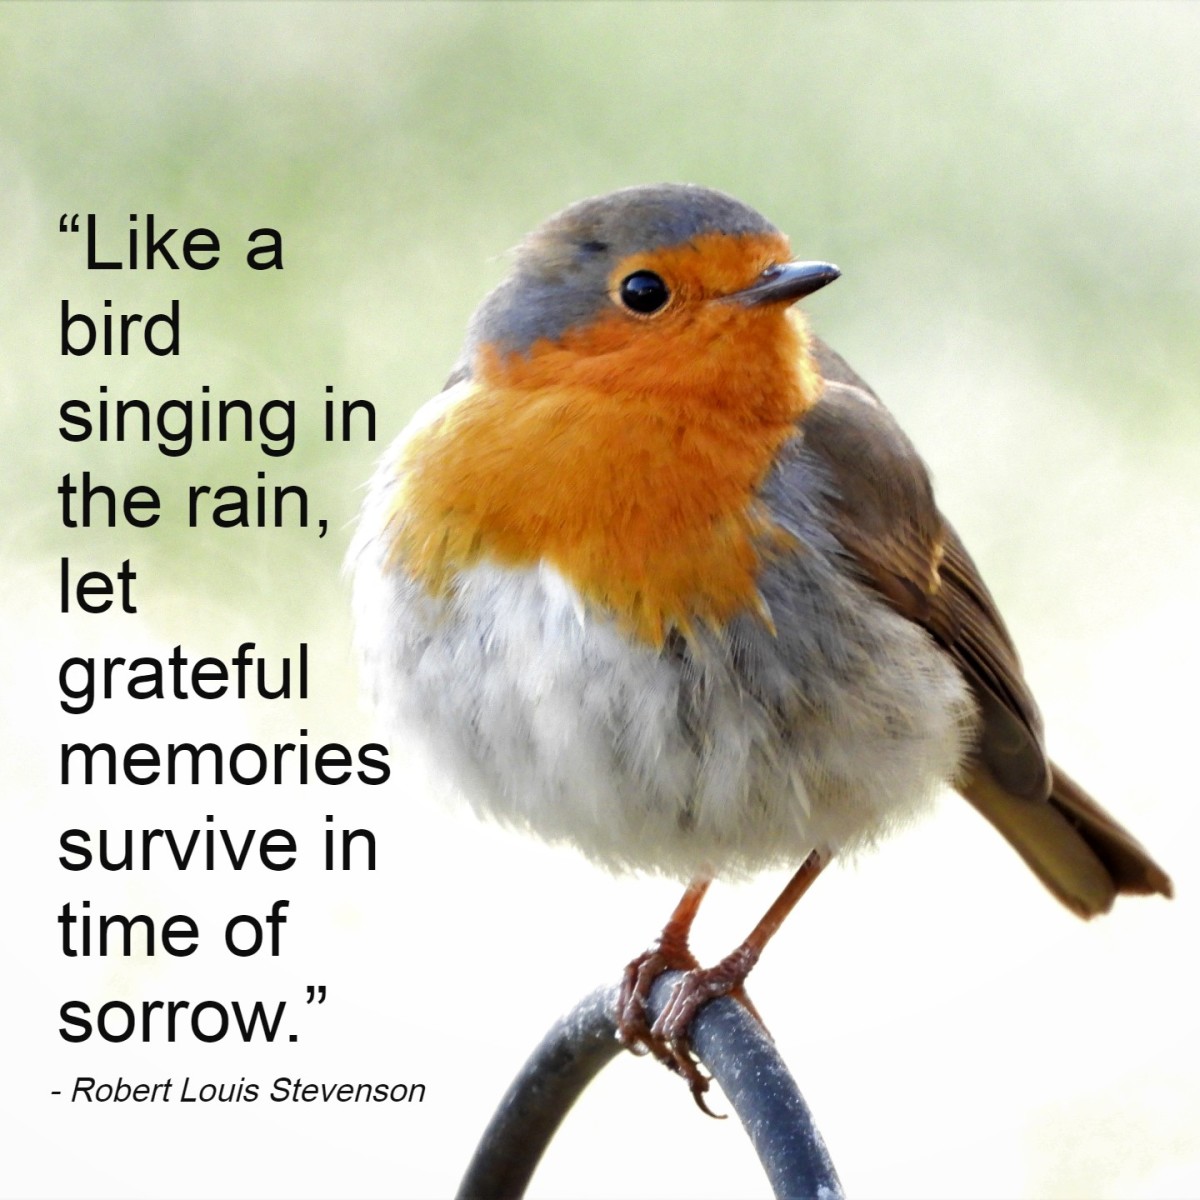 “Like a bird singing in the rain, let grateful memories survive in time of sorrow.” - Robert Louis Stevenson, Scottish novelist